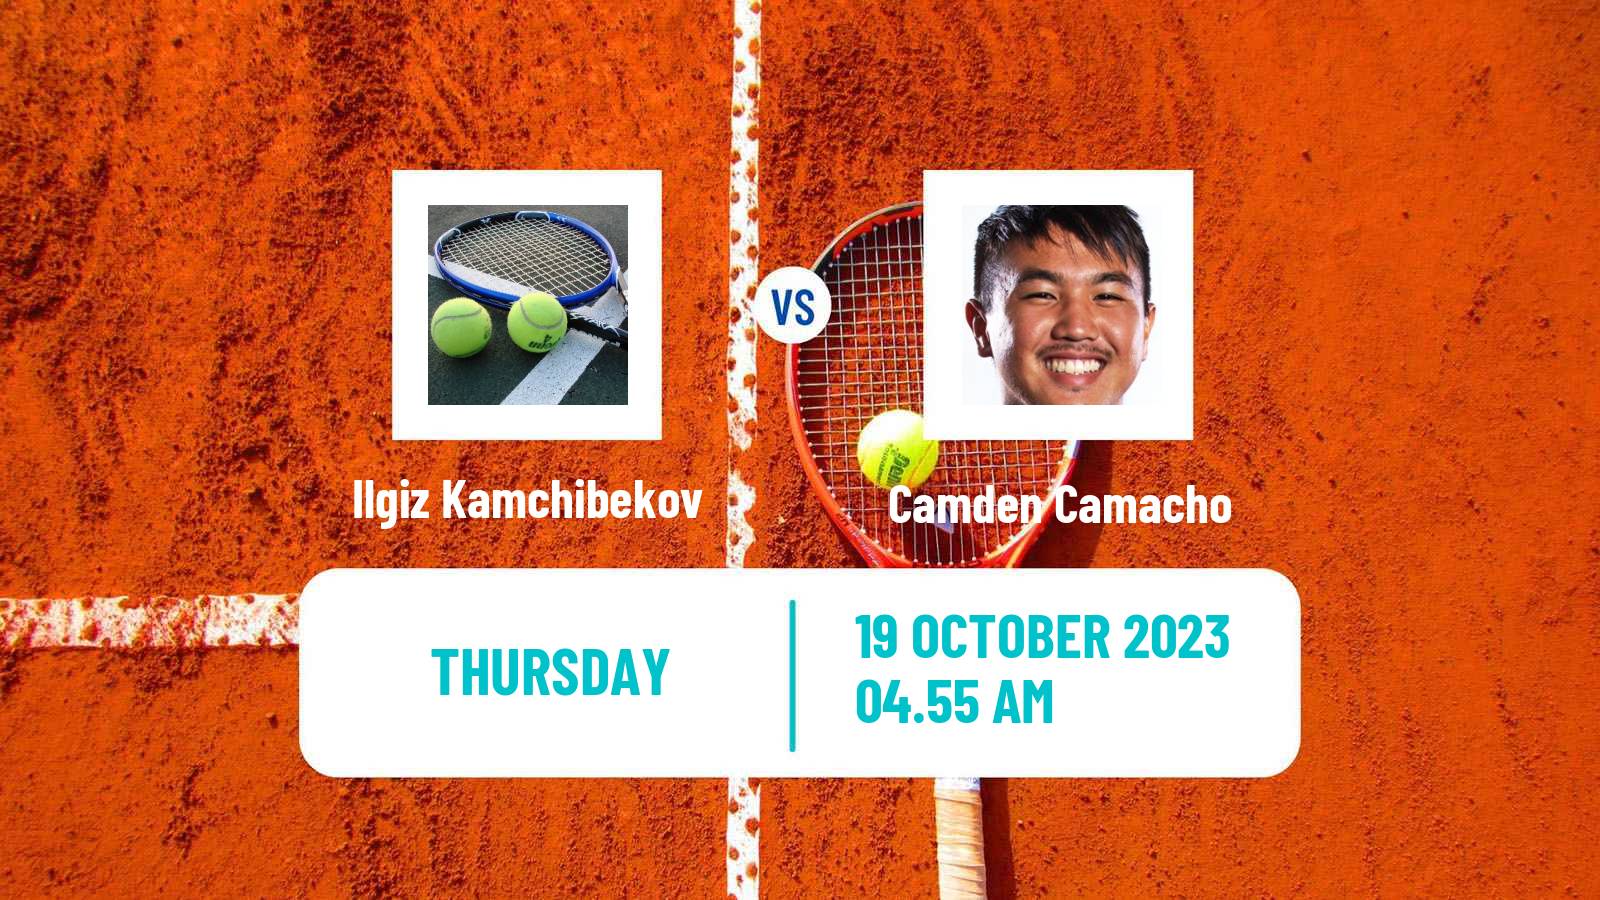 Tennis Davis Cup Group IV Ilgiz Kamchibekov - Camden Camacho